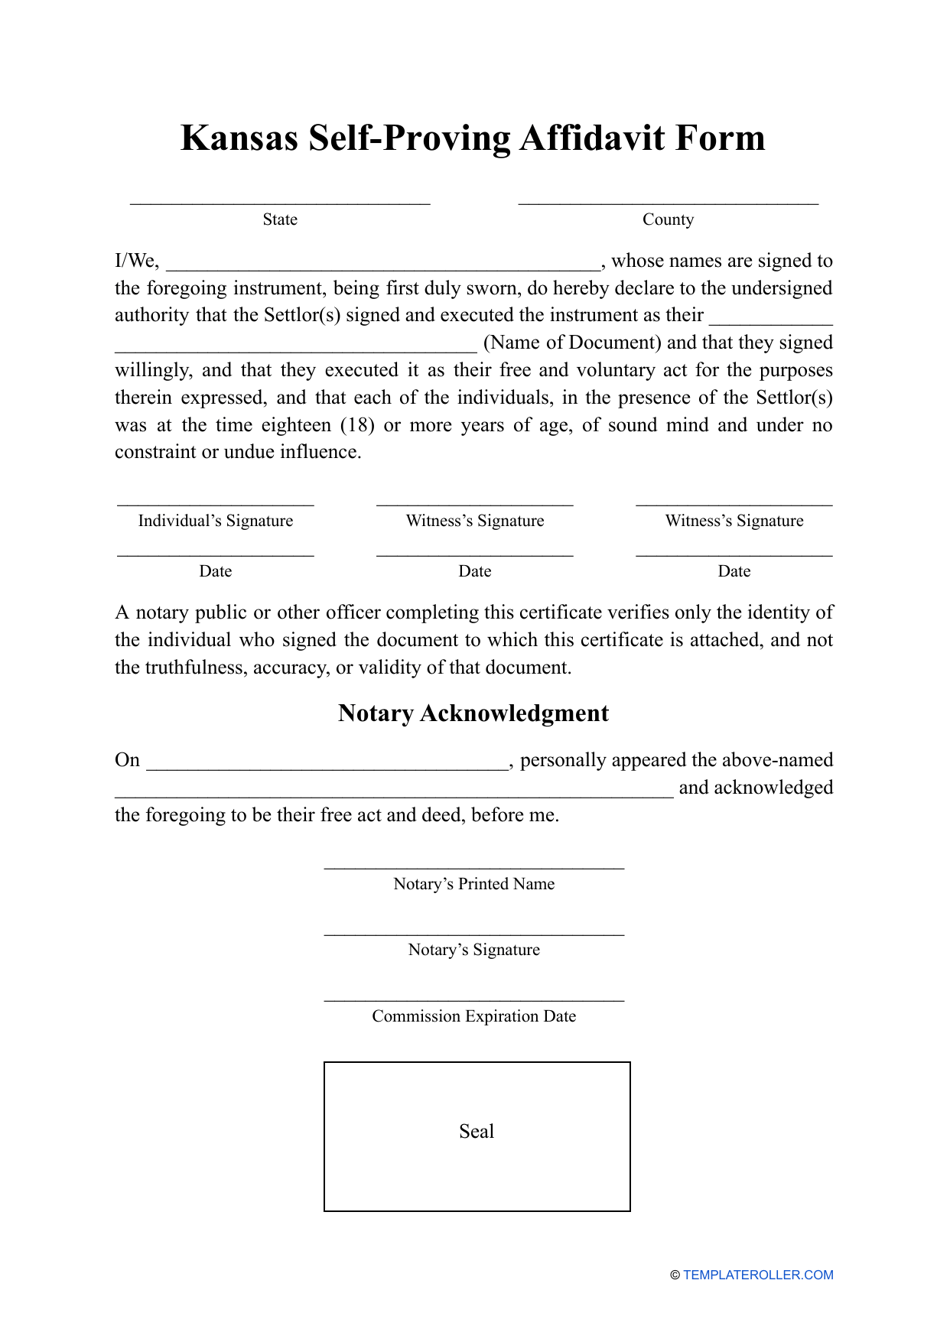 Self-proving Affidavit Form - Kansas, Page 1